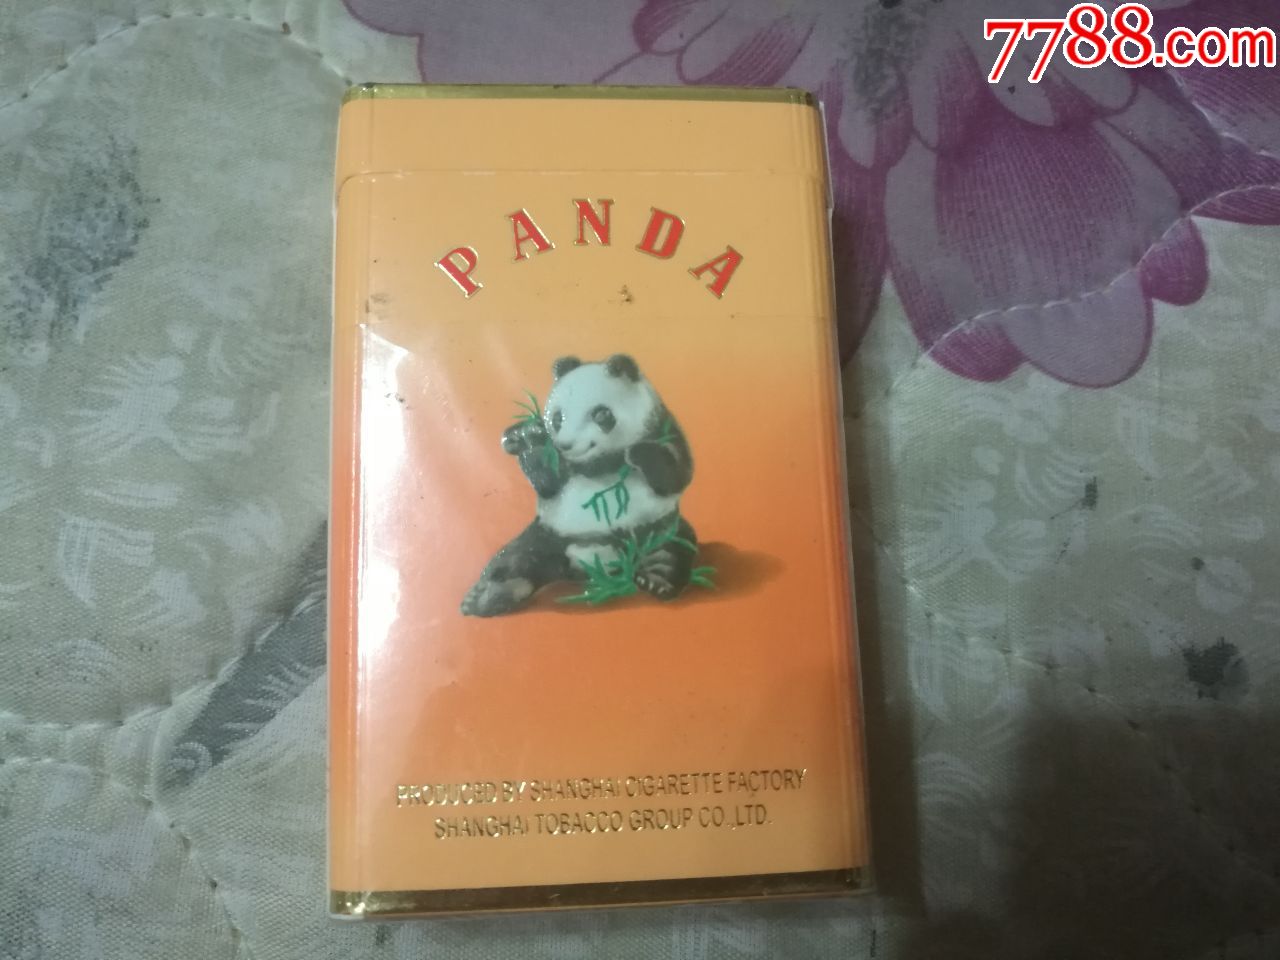 熊猫香烟专*出口-2.0000元-se59700969-7788烟标收藏